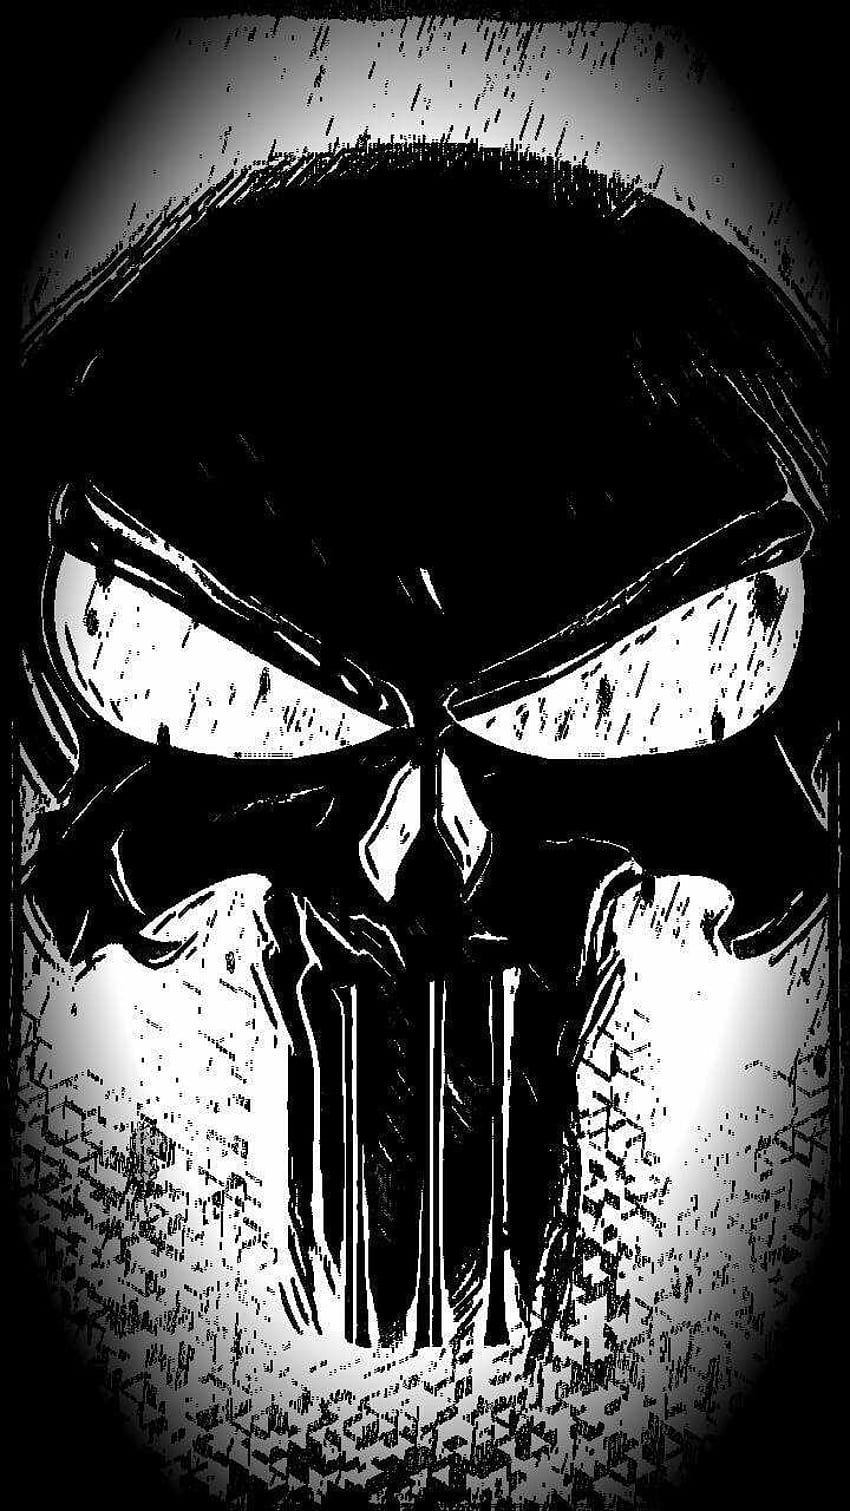 Punisher Skull IPhone Wallpaper 82 images